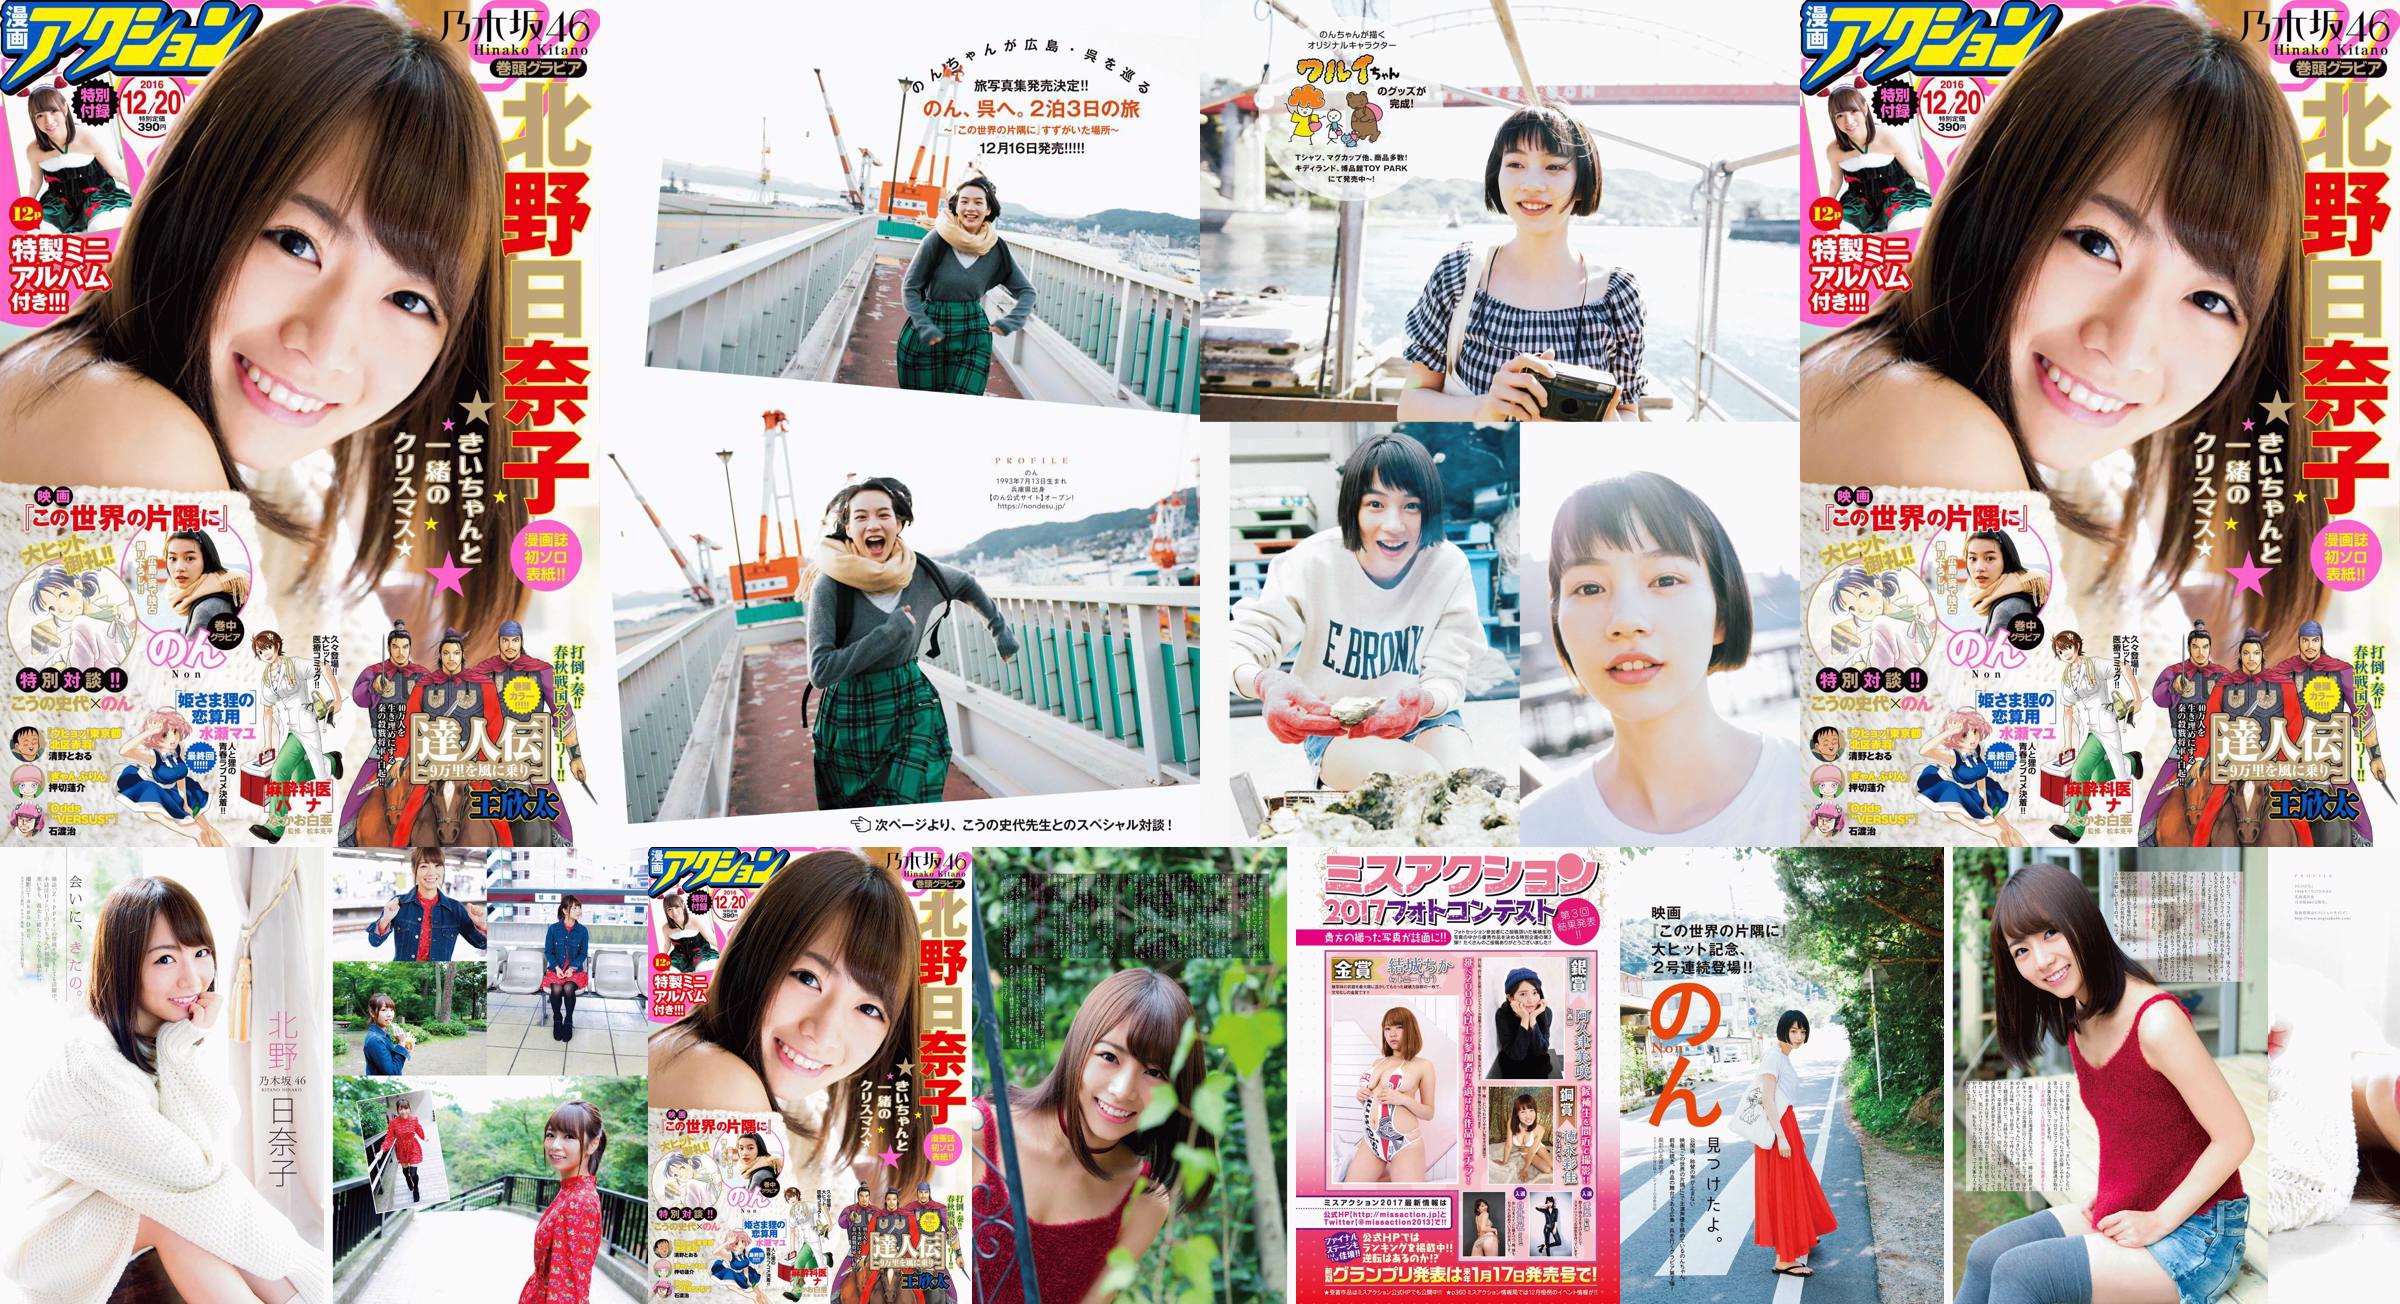 [Manga Action] Kitano Hinako のん 2016 No.24 Photo Magazine No.5e4a6e Page 13